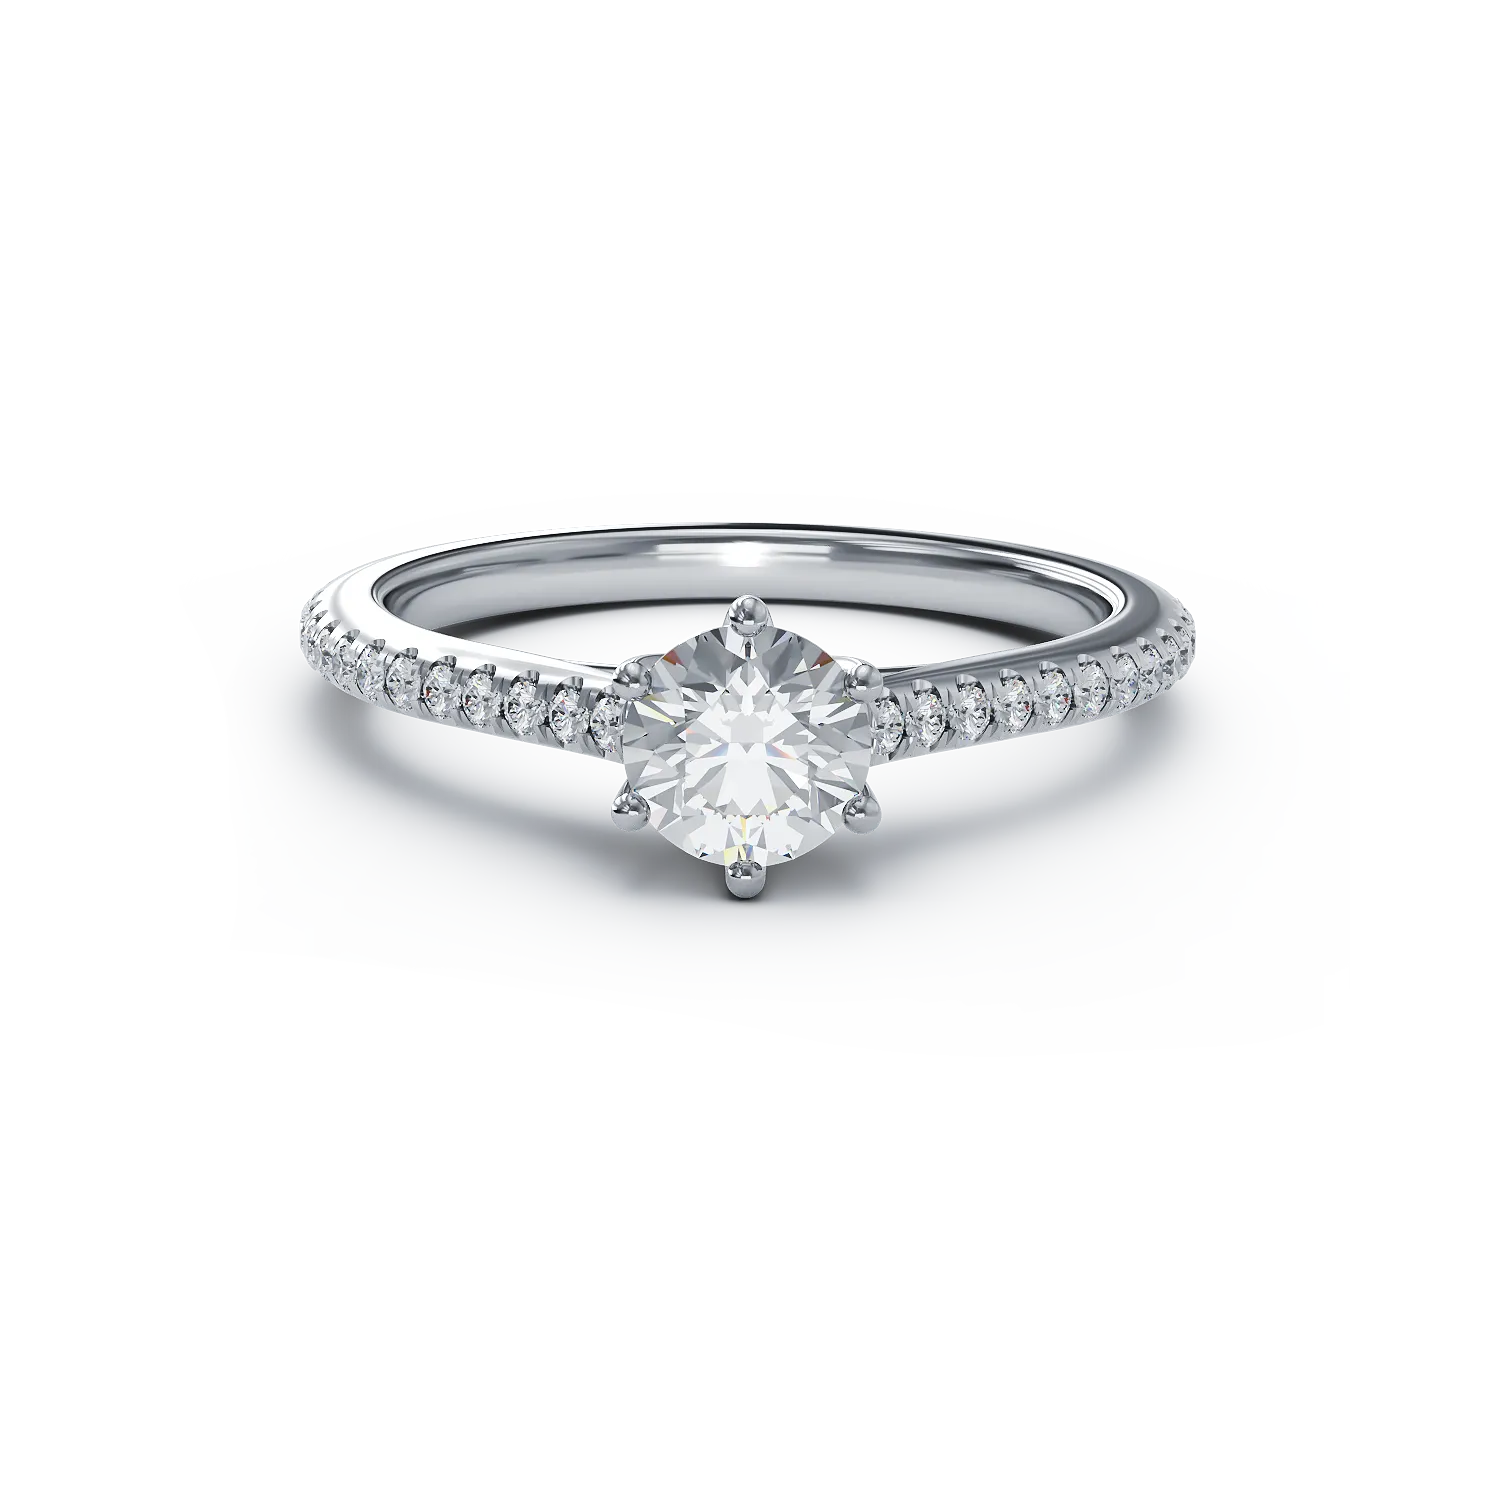 Platinum engagement ring with 0.6ct diamond and 0.183ct diamonds